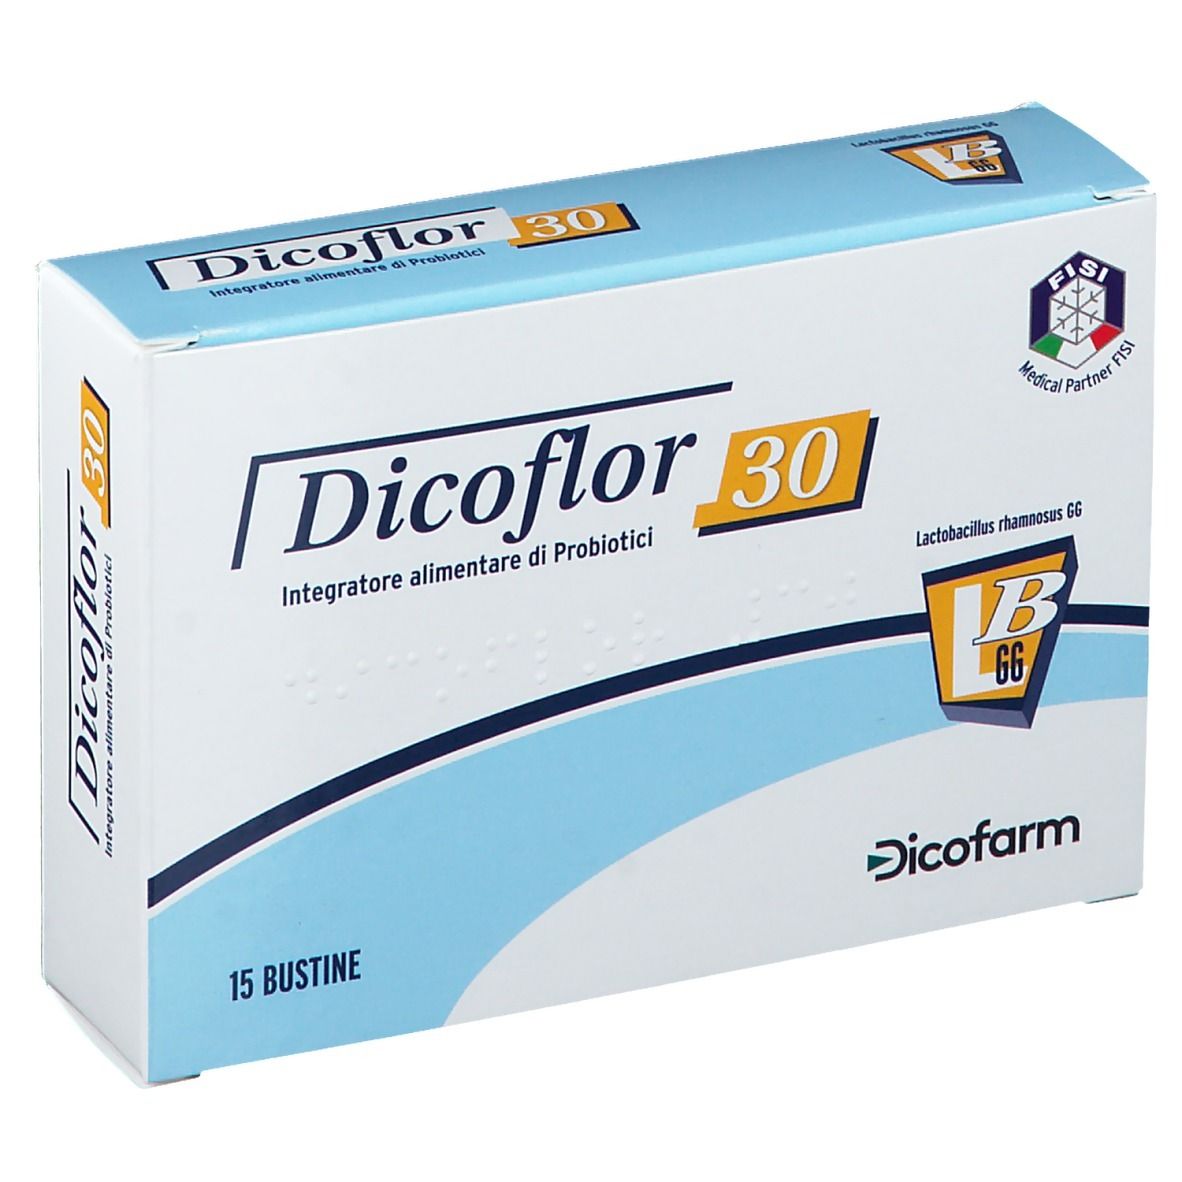 Dicoflor 30